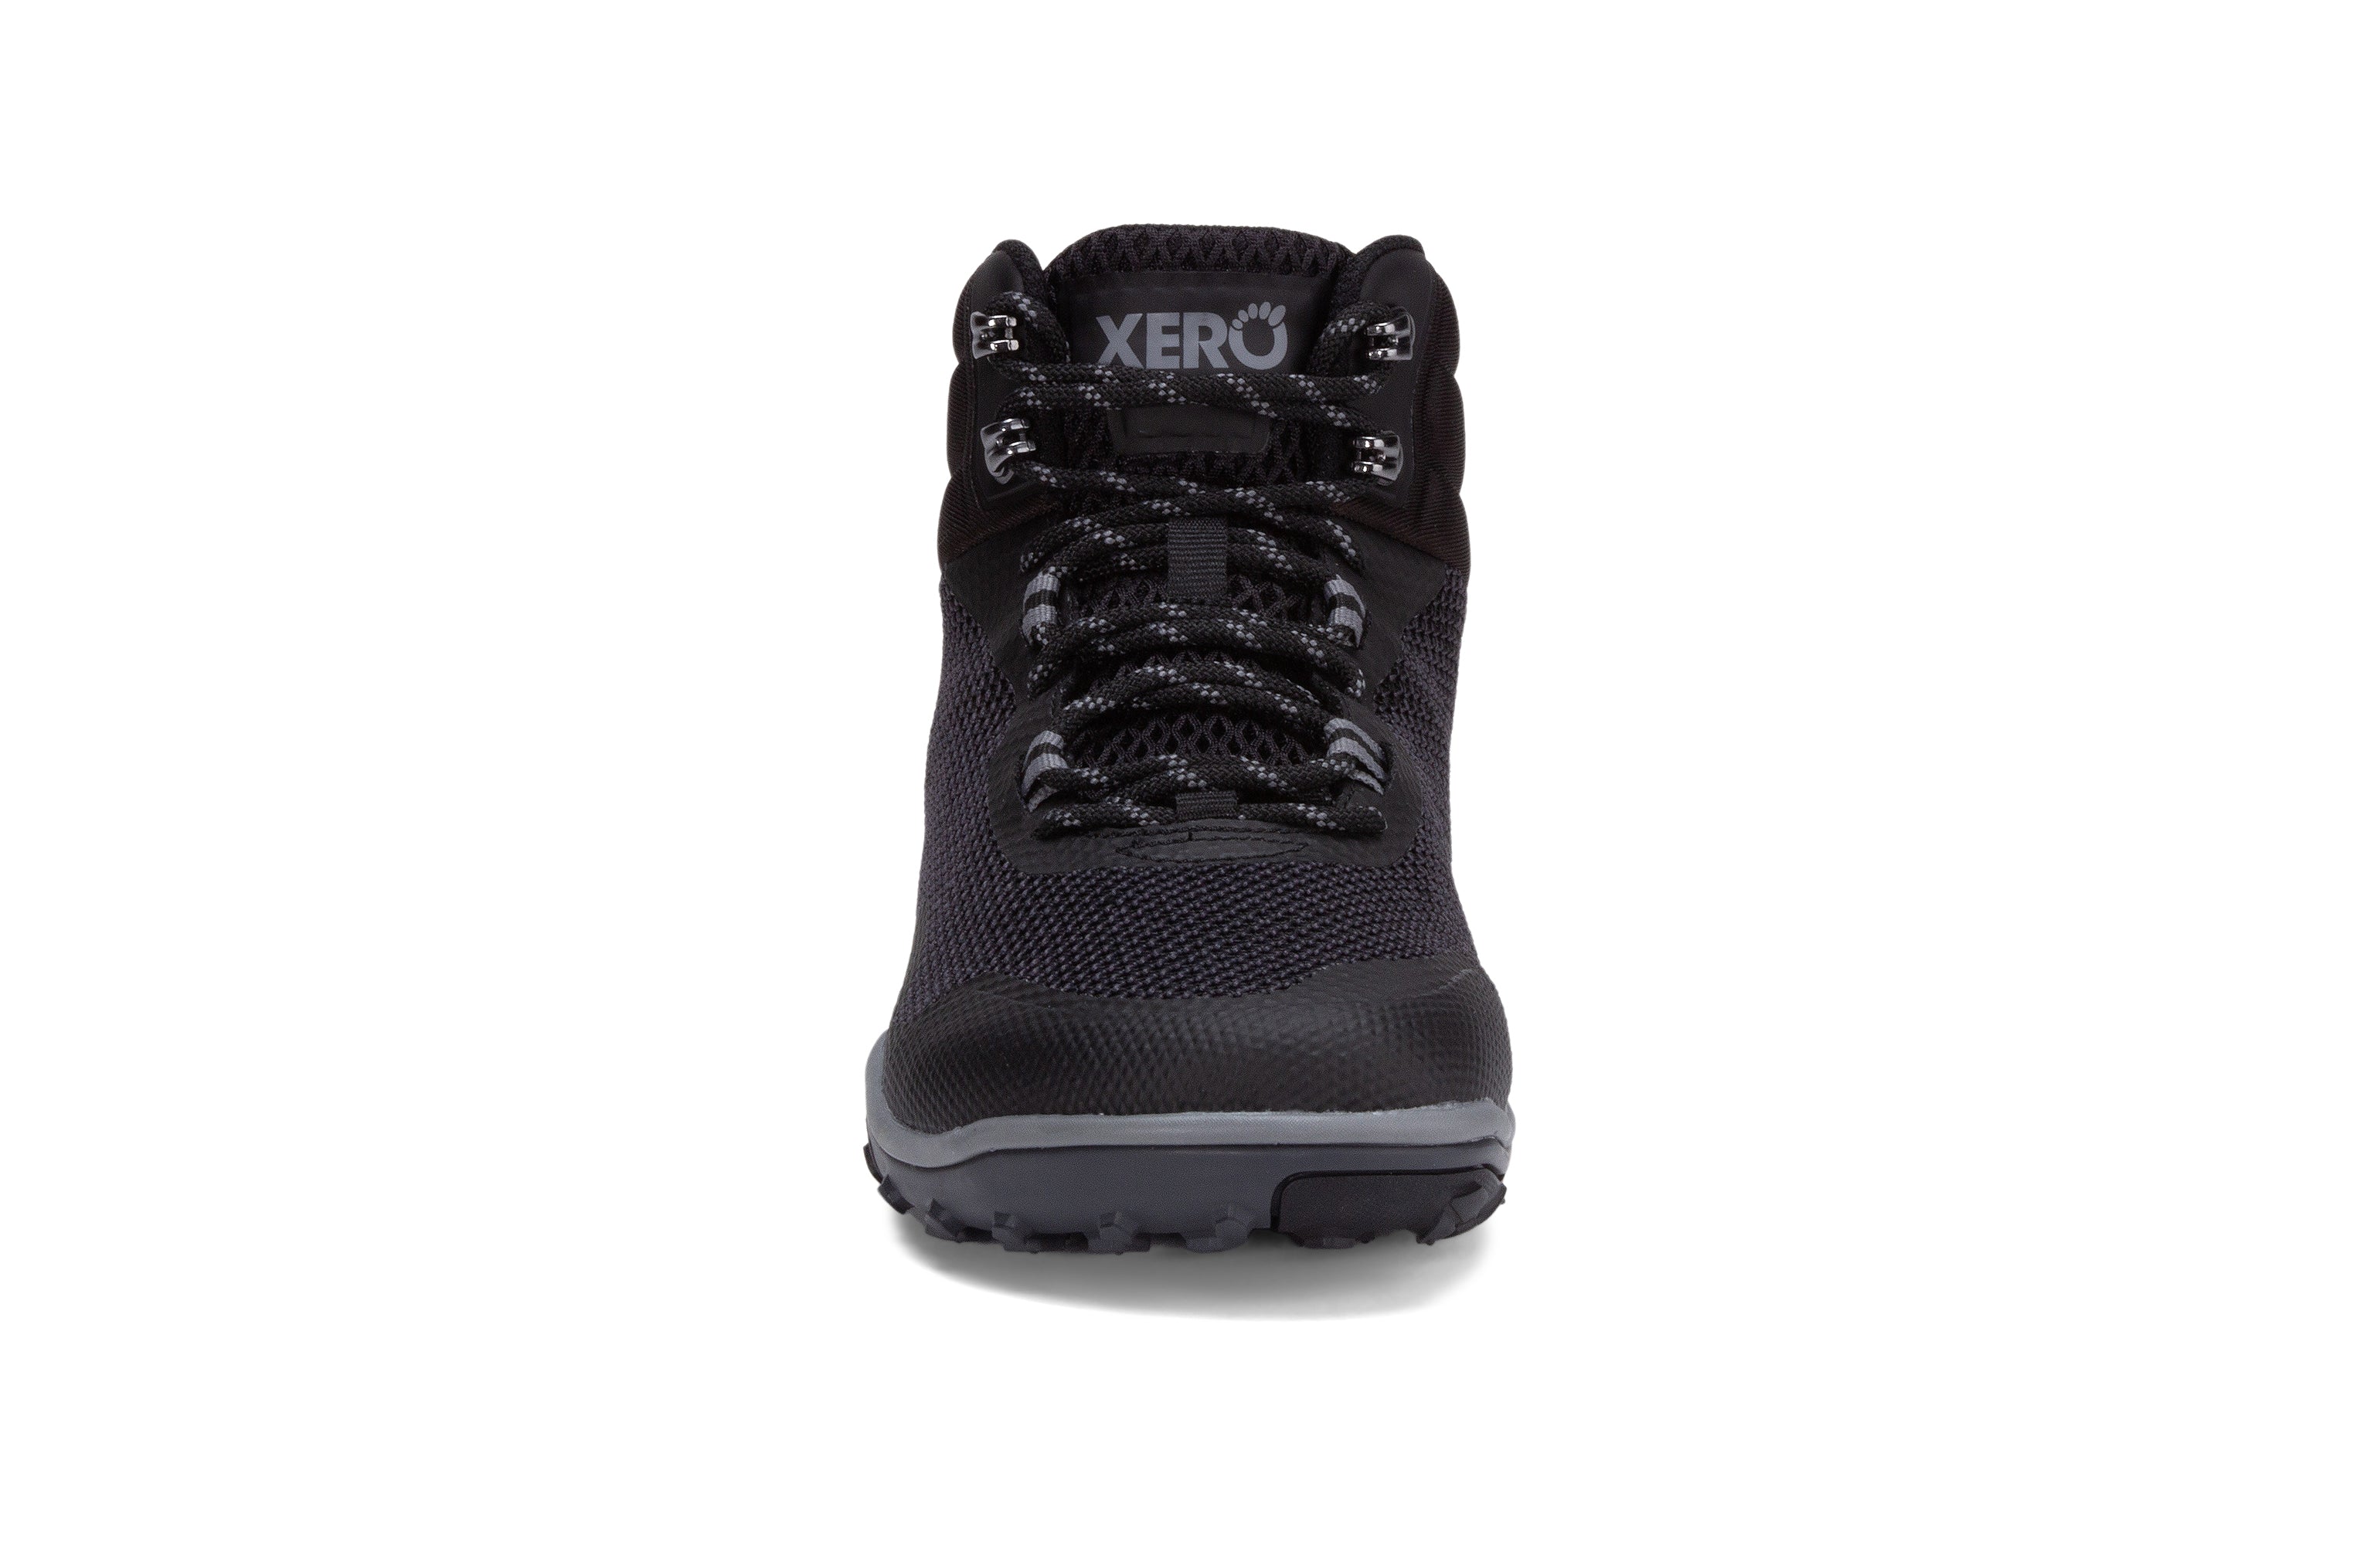 Xero Shoes Scrambler Mid Mens barfods lette vandrestøvler til mænd i farven black, forfra